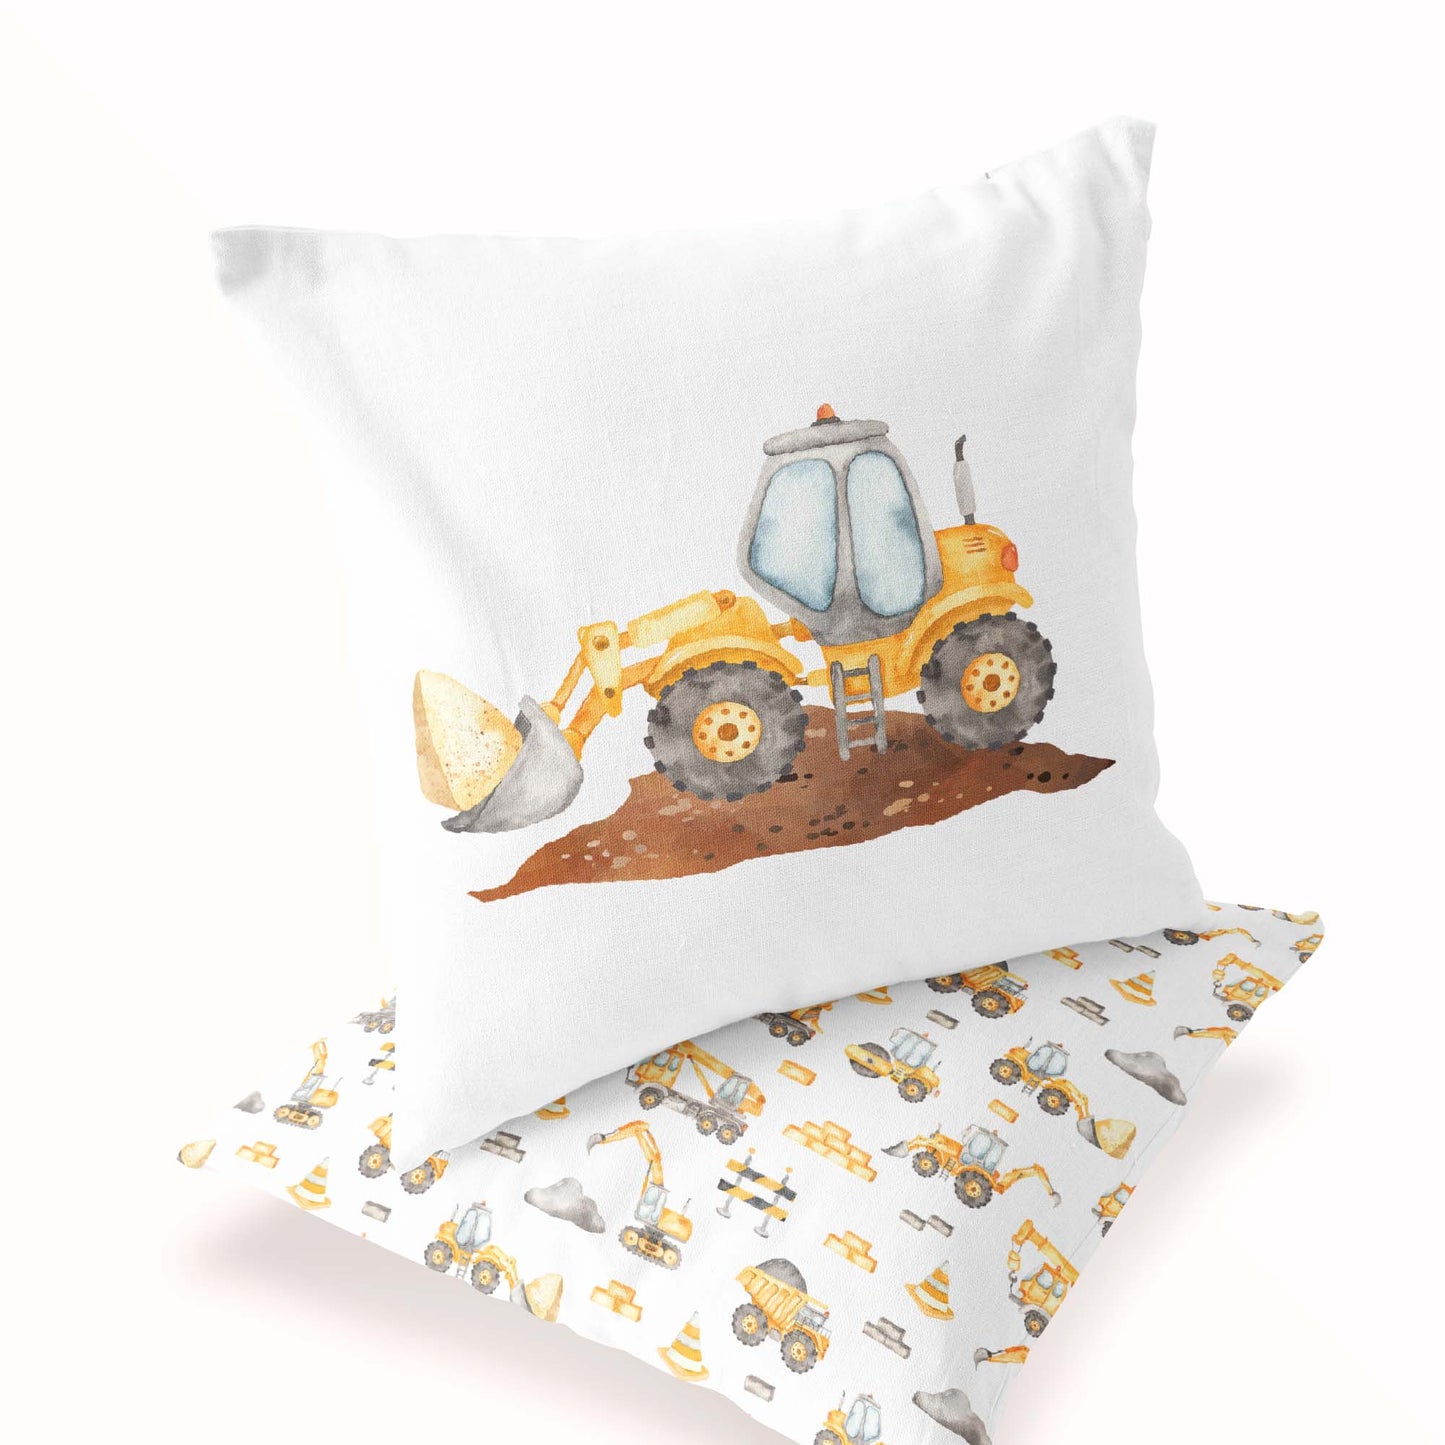 Tractor faux suede pillow cover, Construction nursery decor - Under Construction